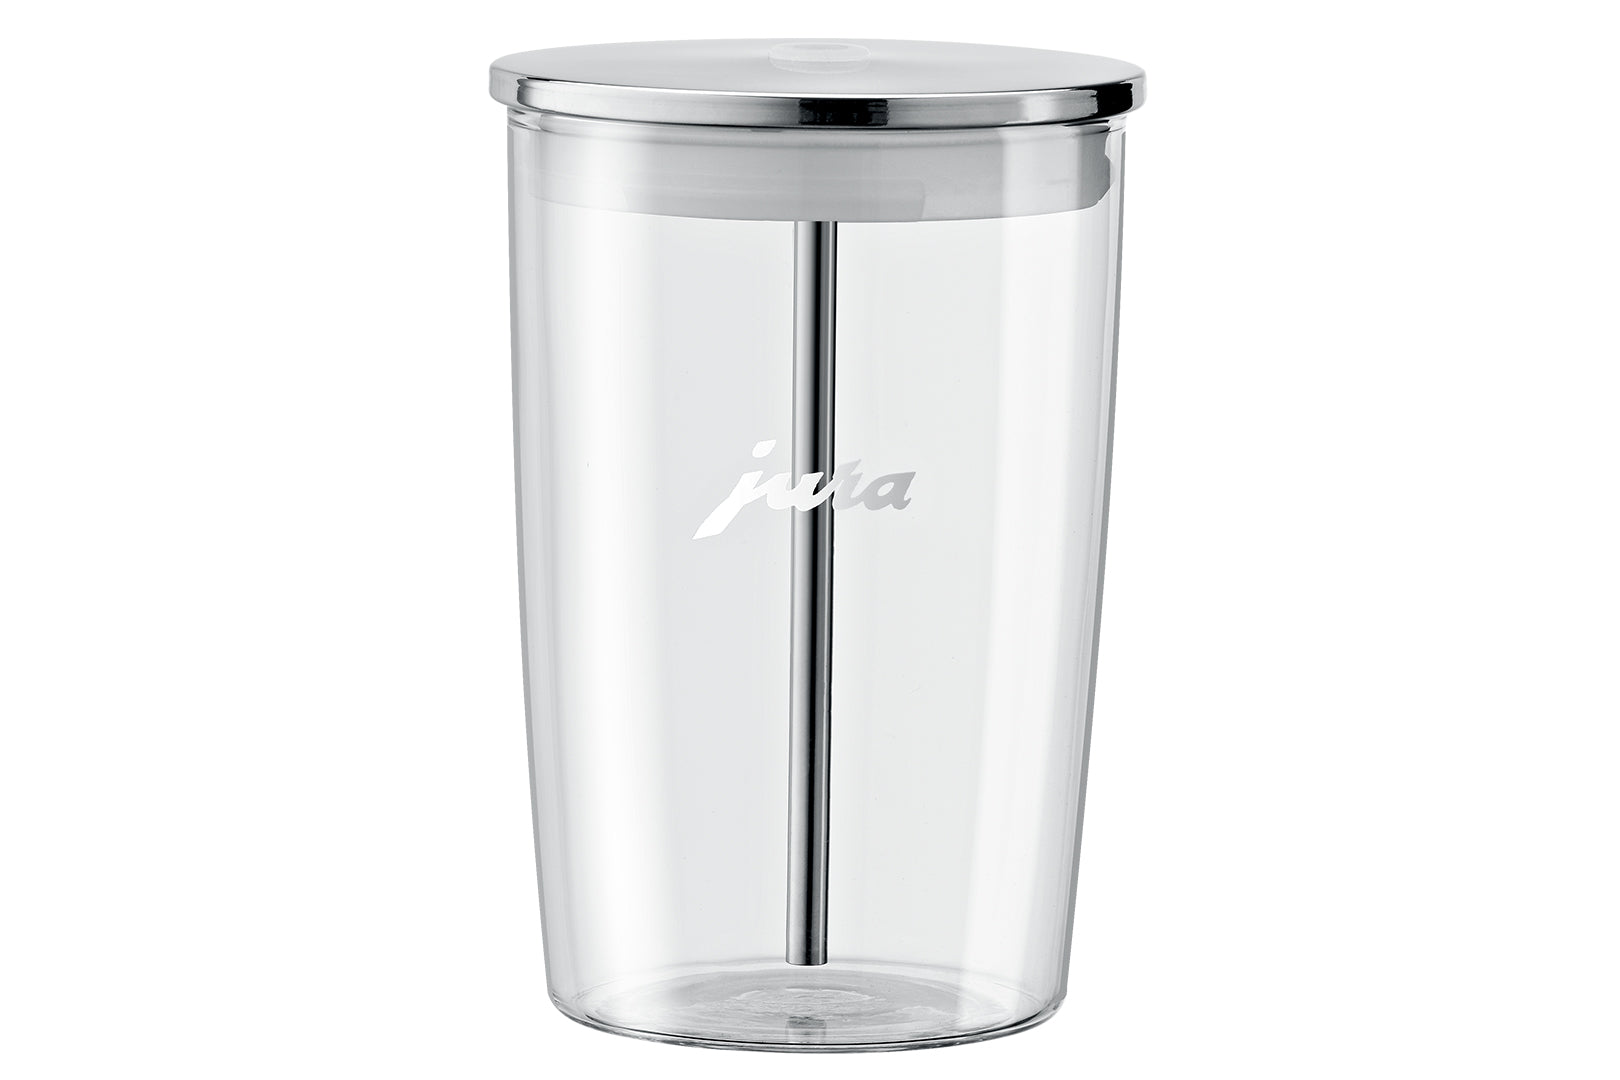 Jura - Glass Milk Container